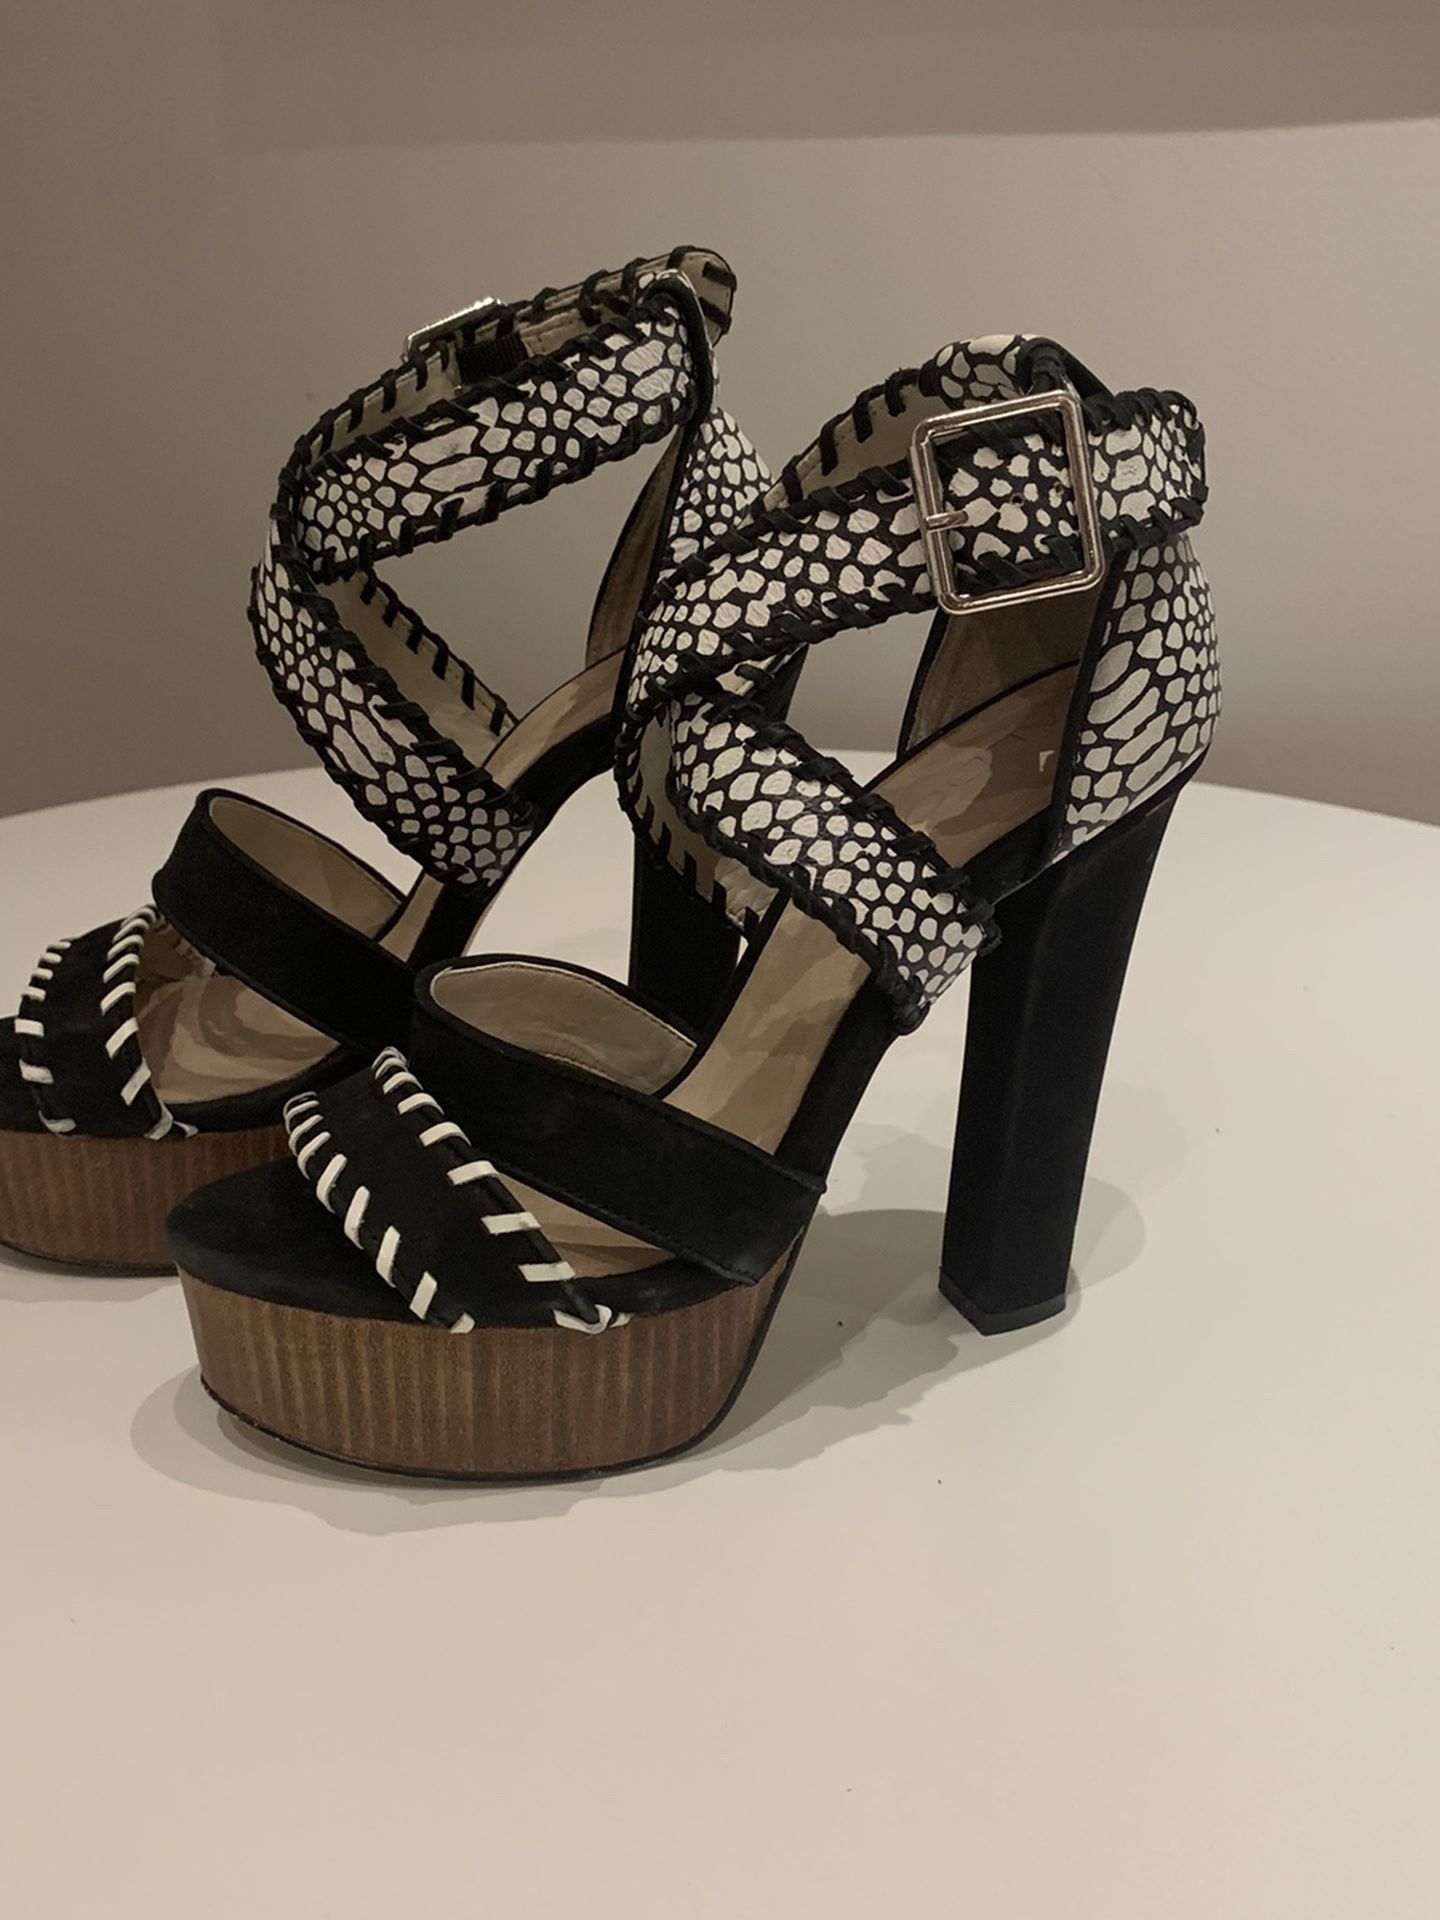 ALDO heels size 8